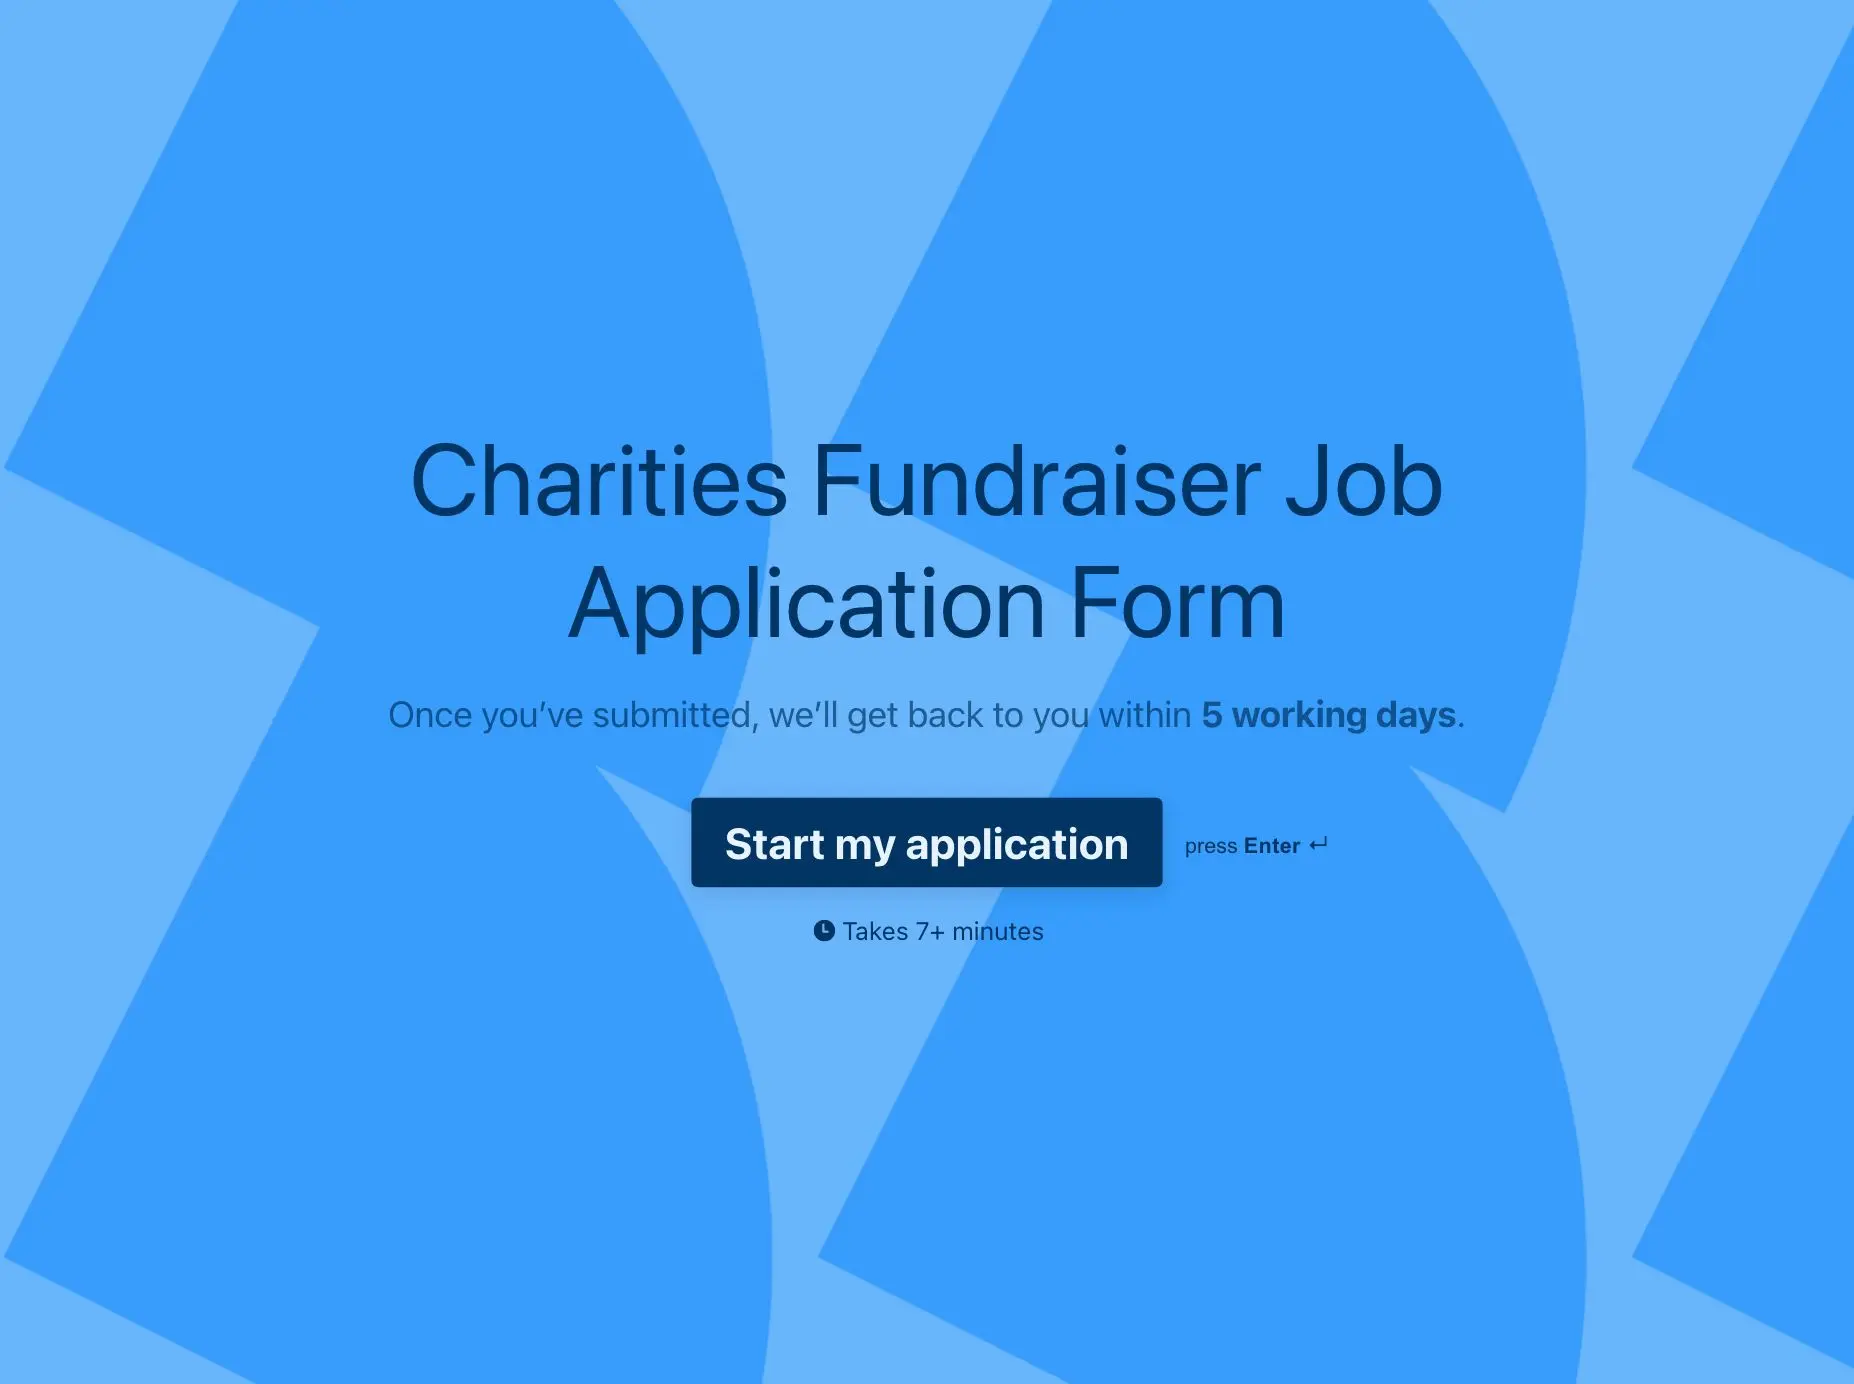 Charities Fundraiser Job Application Form Template Hero